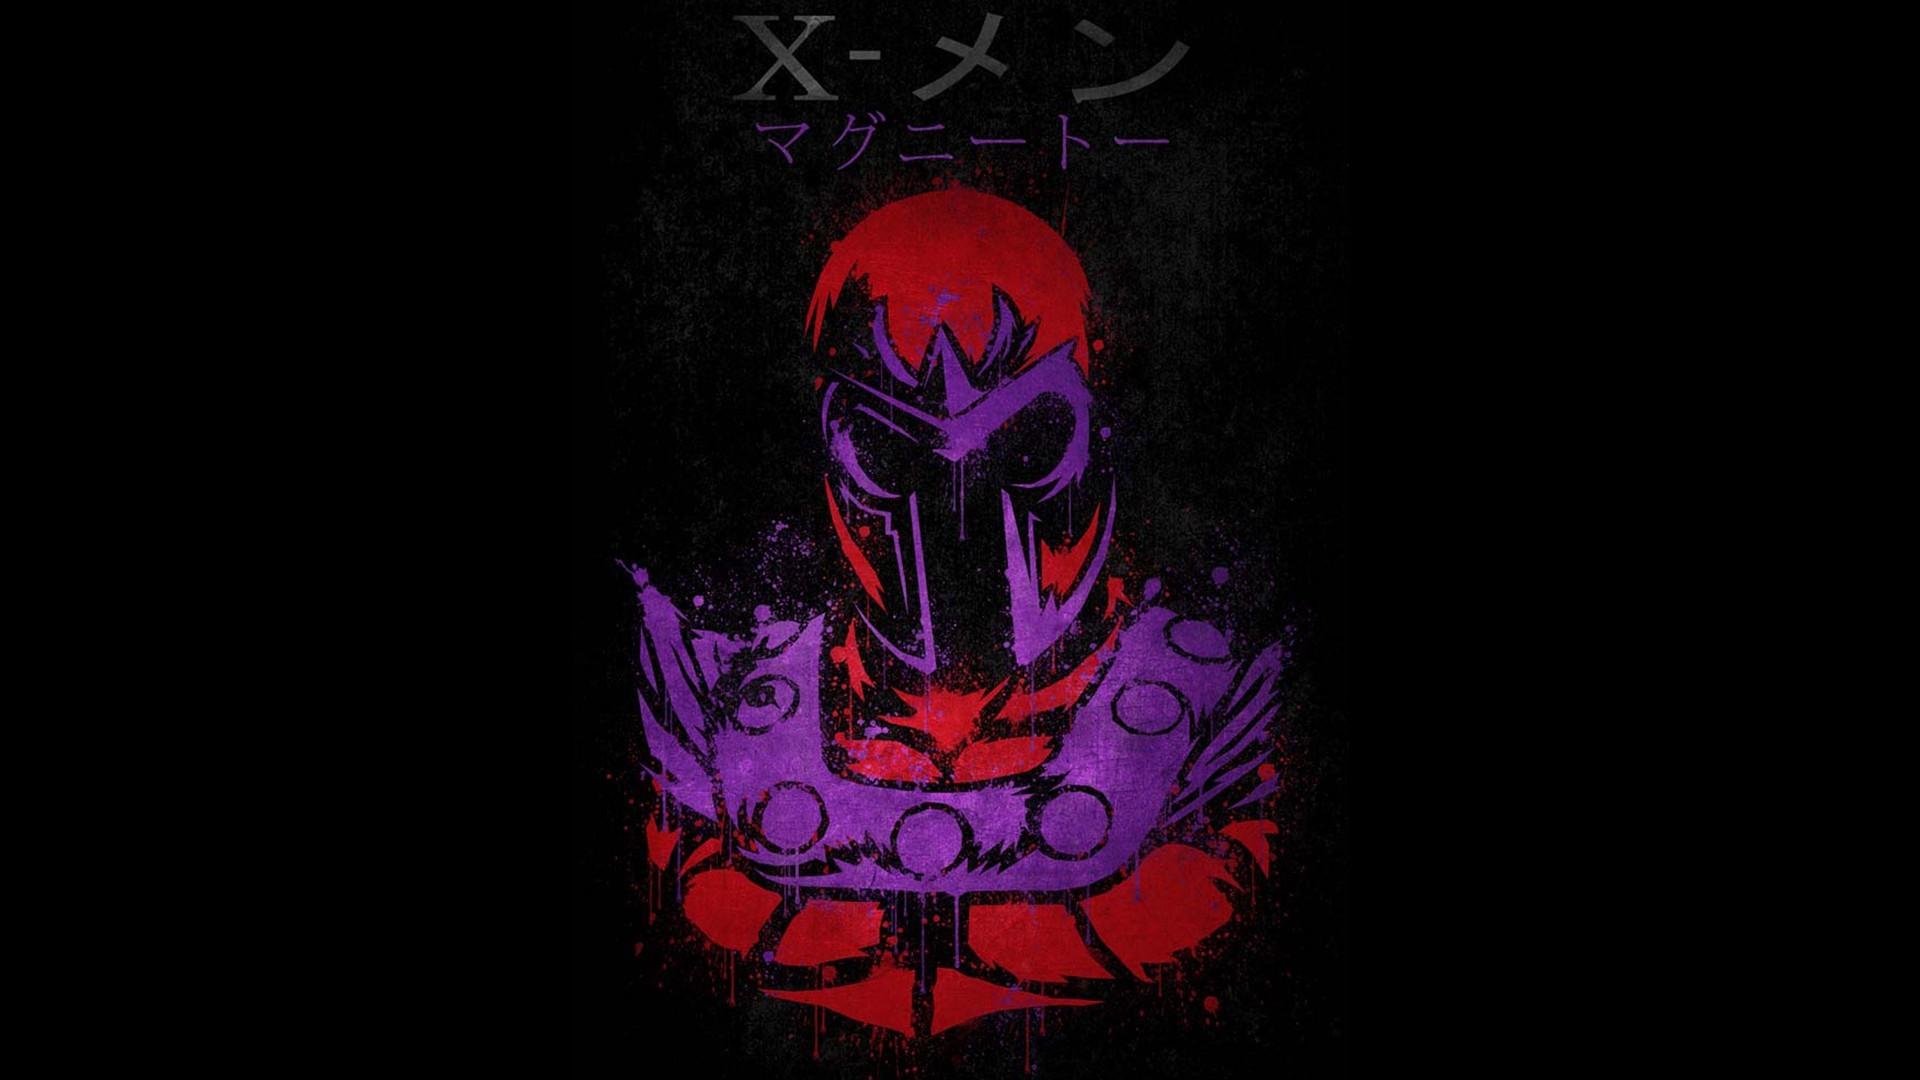 Magneto marvel comics x-men black background wallpaper | (87774)